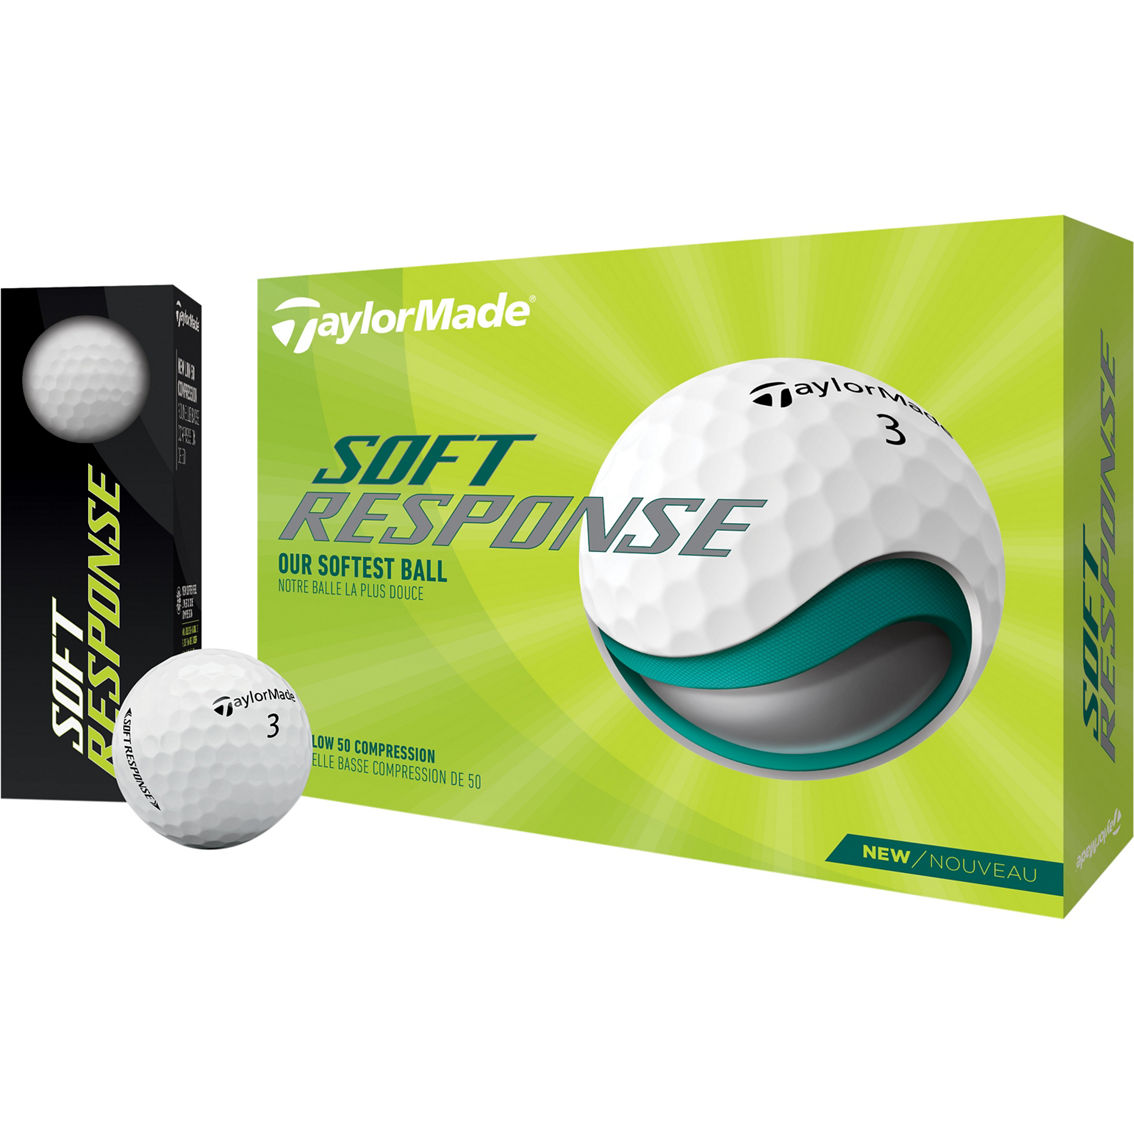 TaylorMade Soft Response Golf Balls 12 ct. - Image 1 of 4